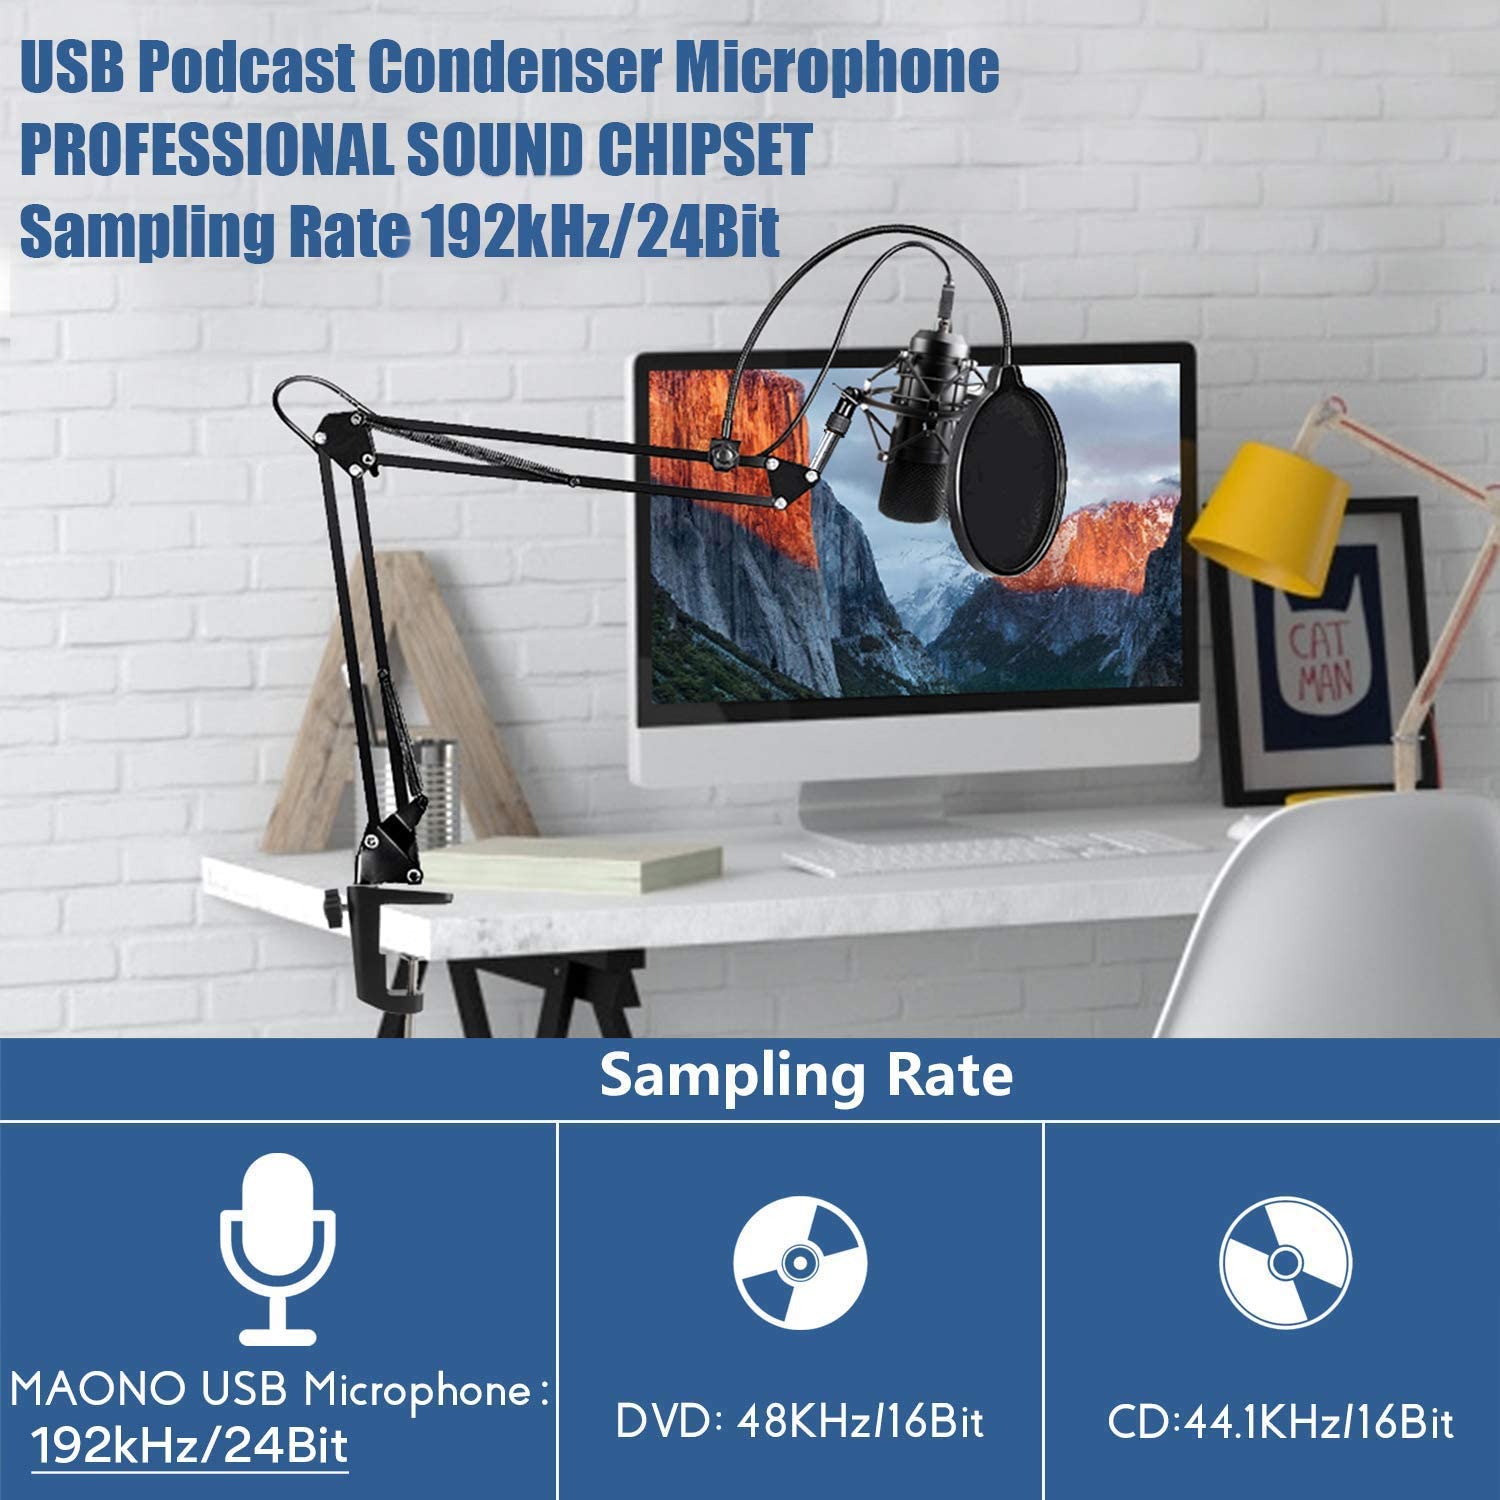 USB Podcast Condenser Microphone Kit